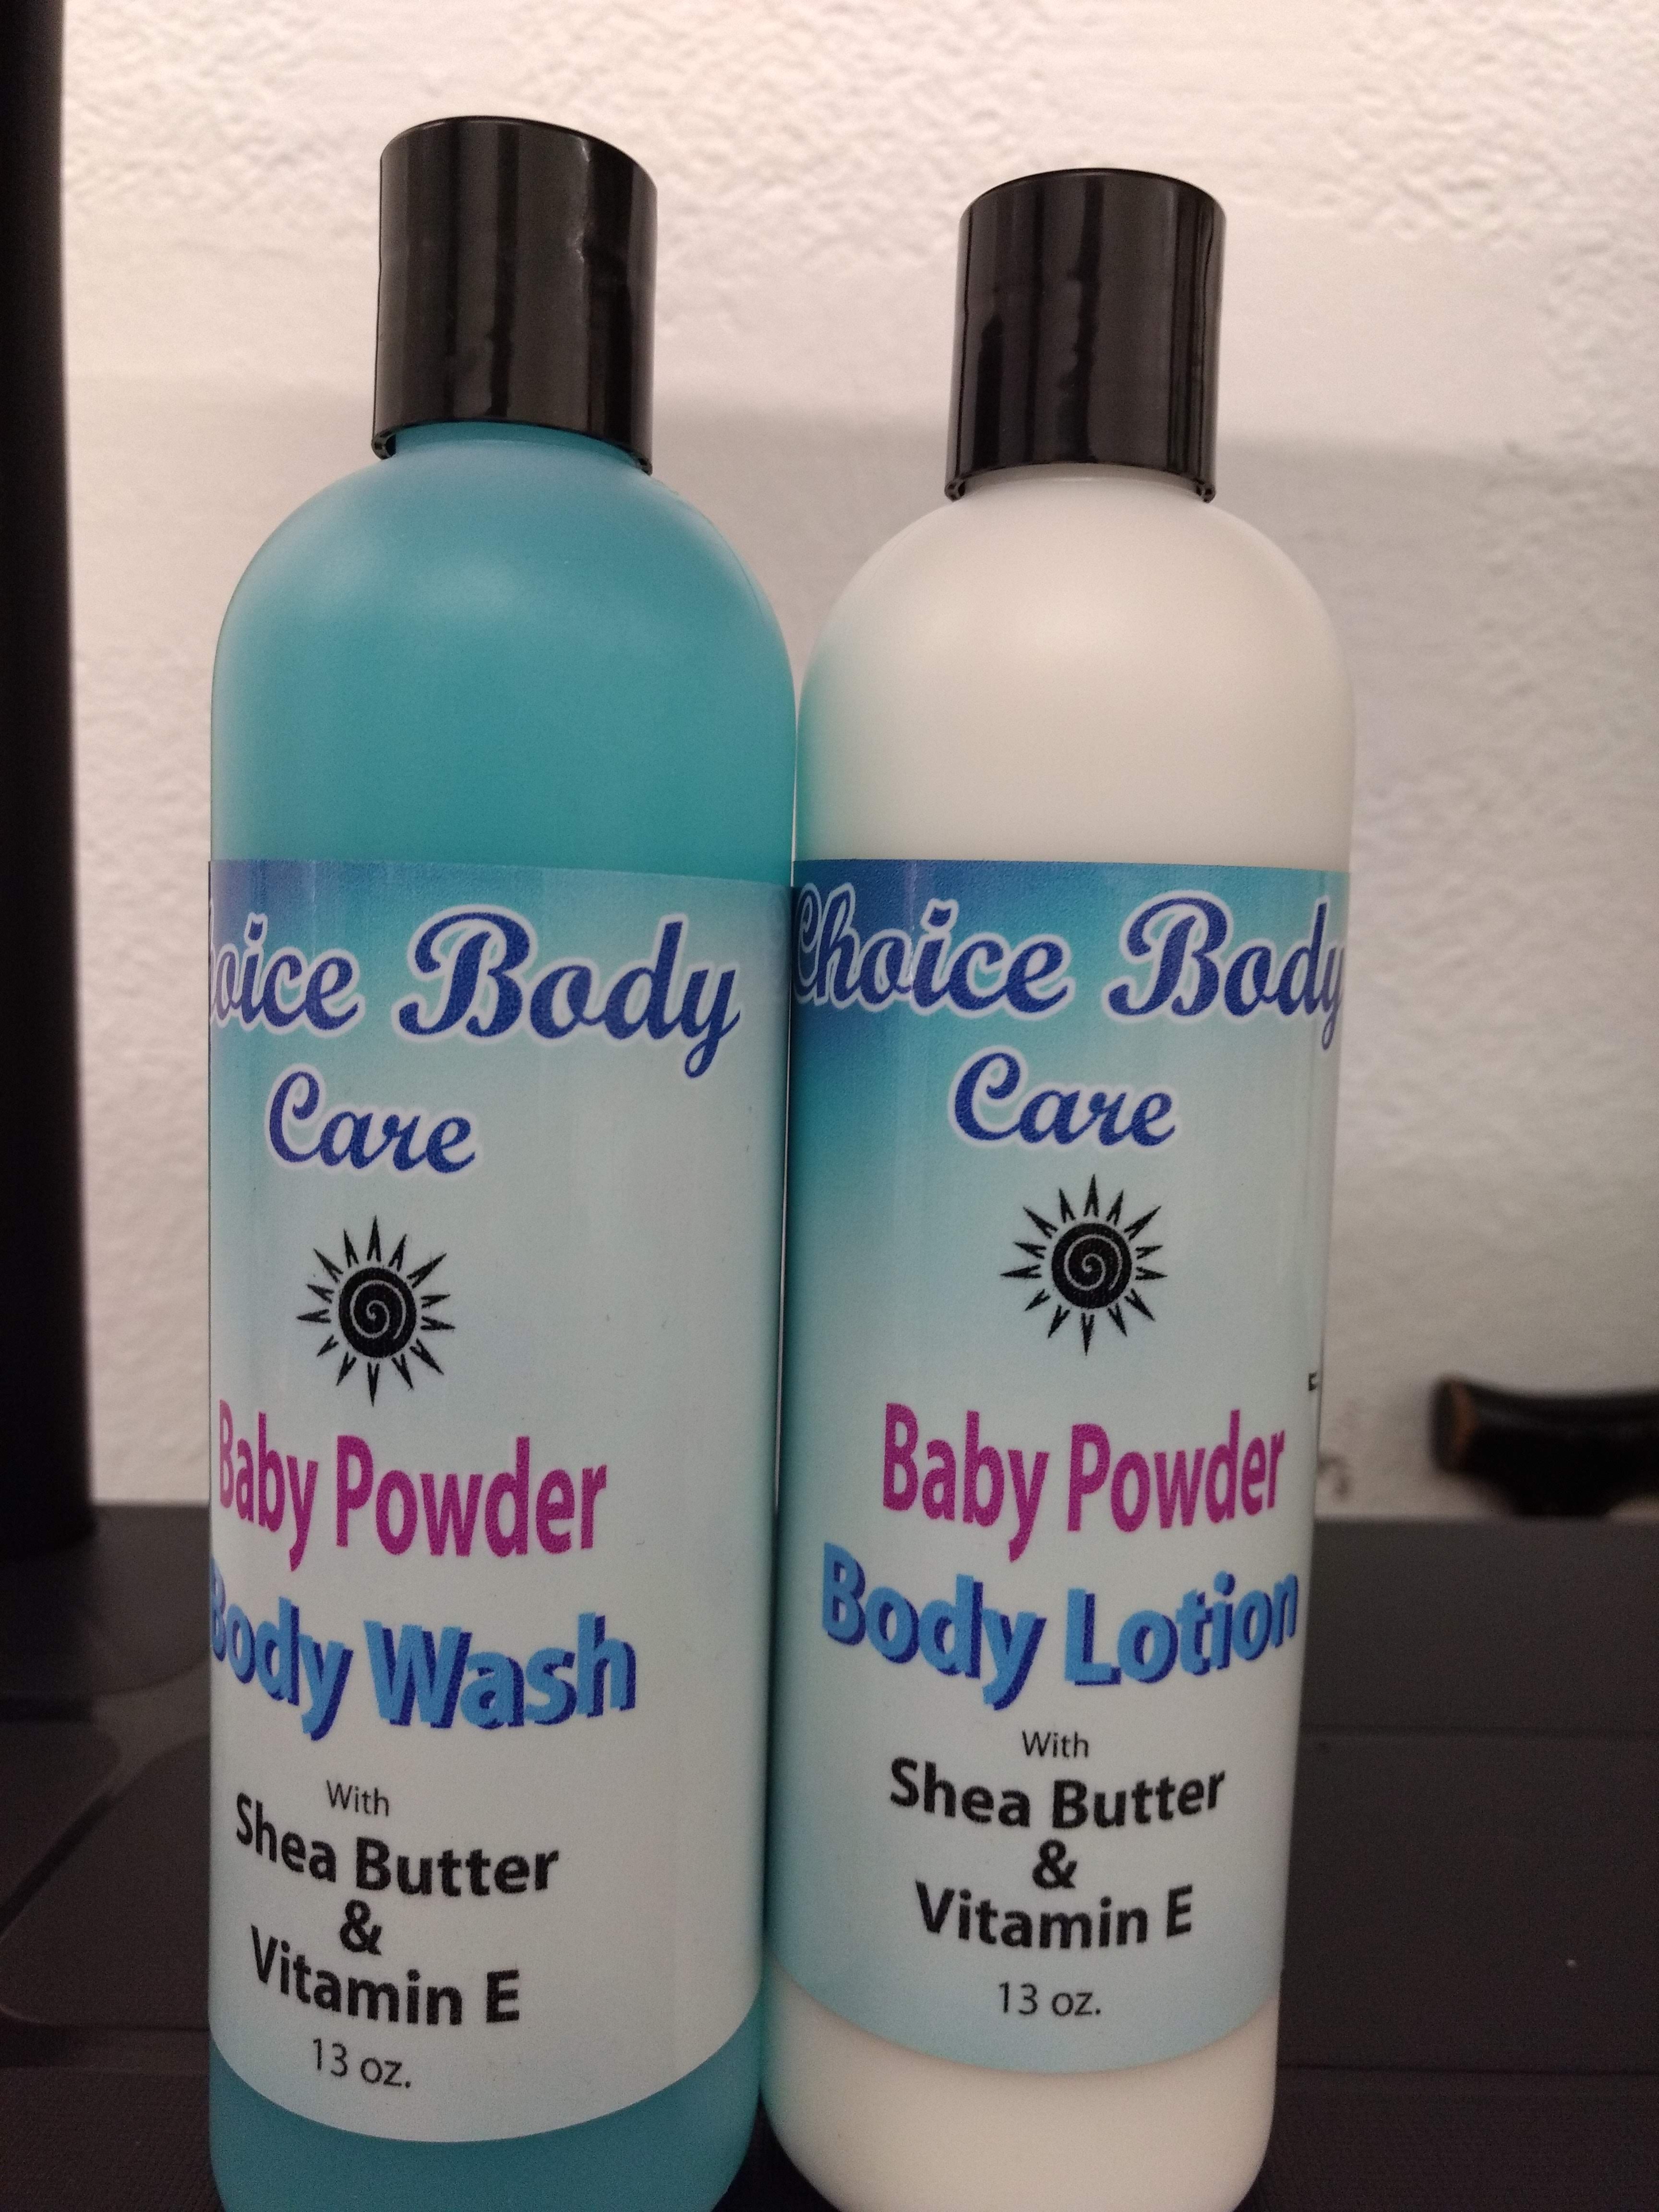 Baby Powder Body Wash with Shea Butter & Vitamin E